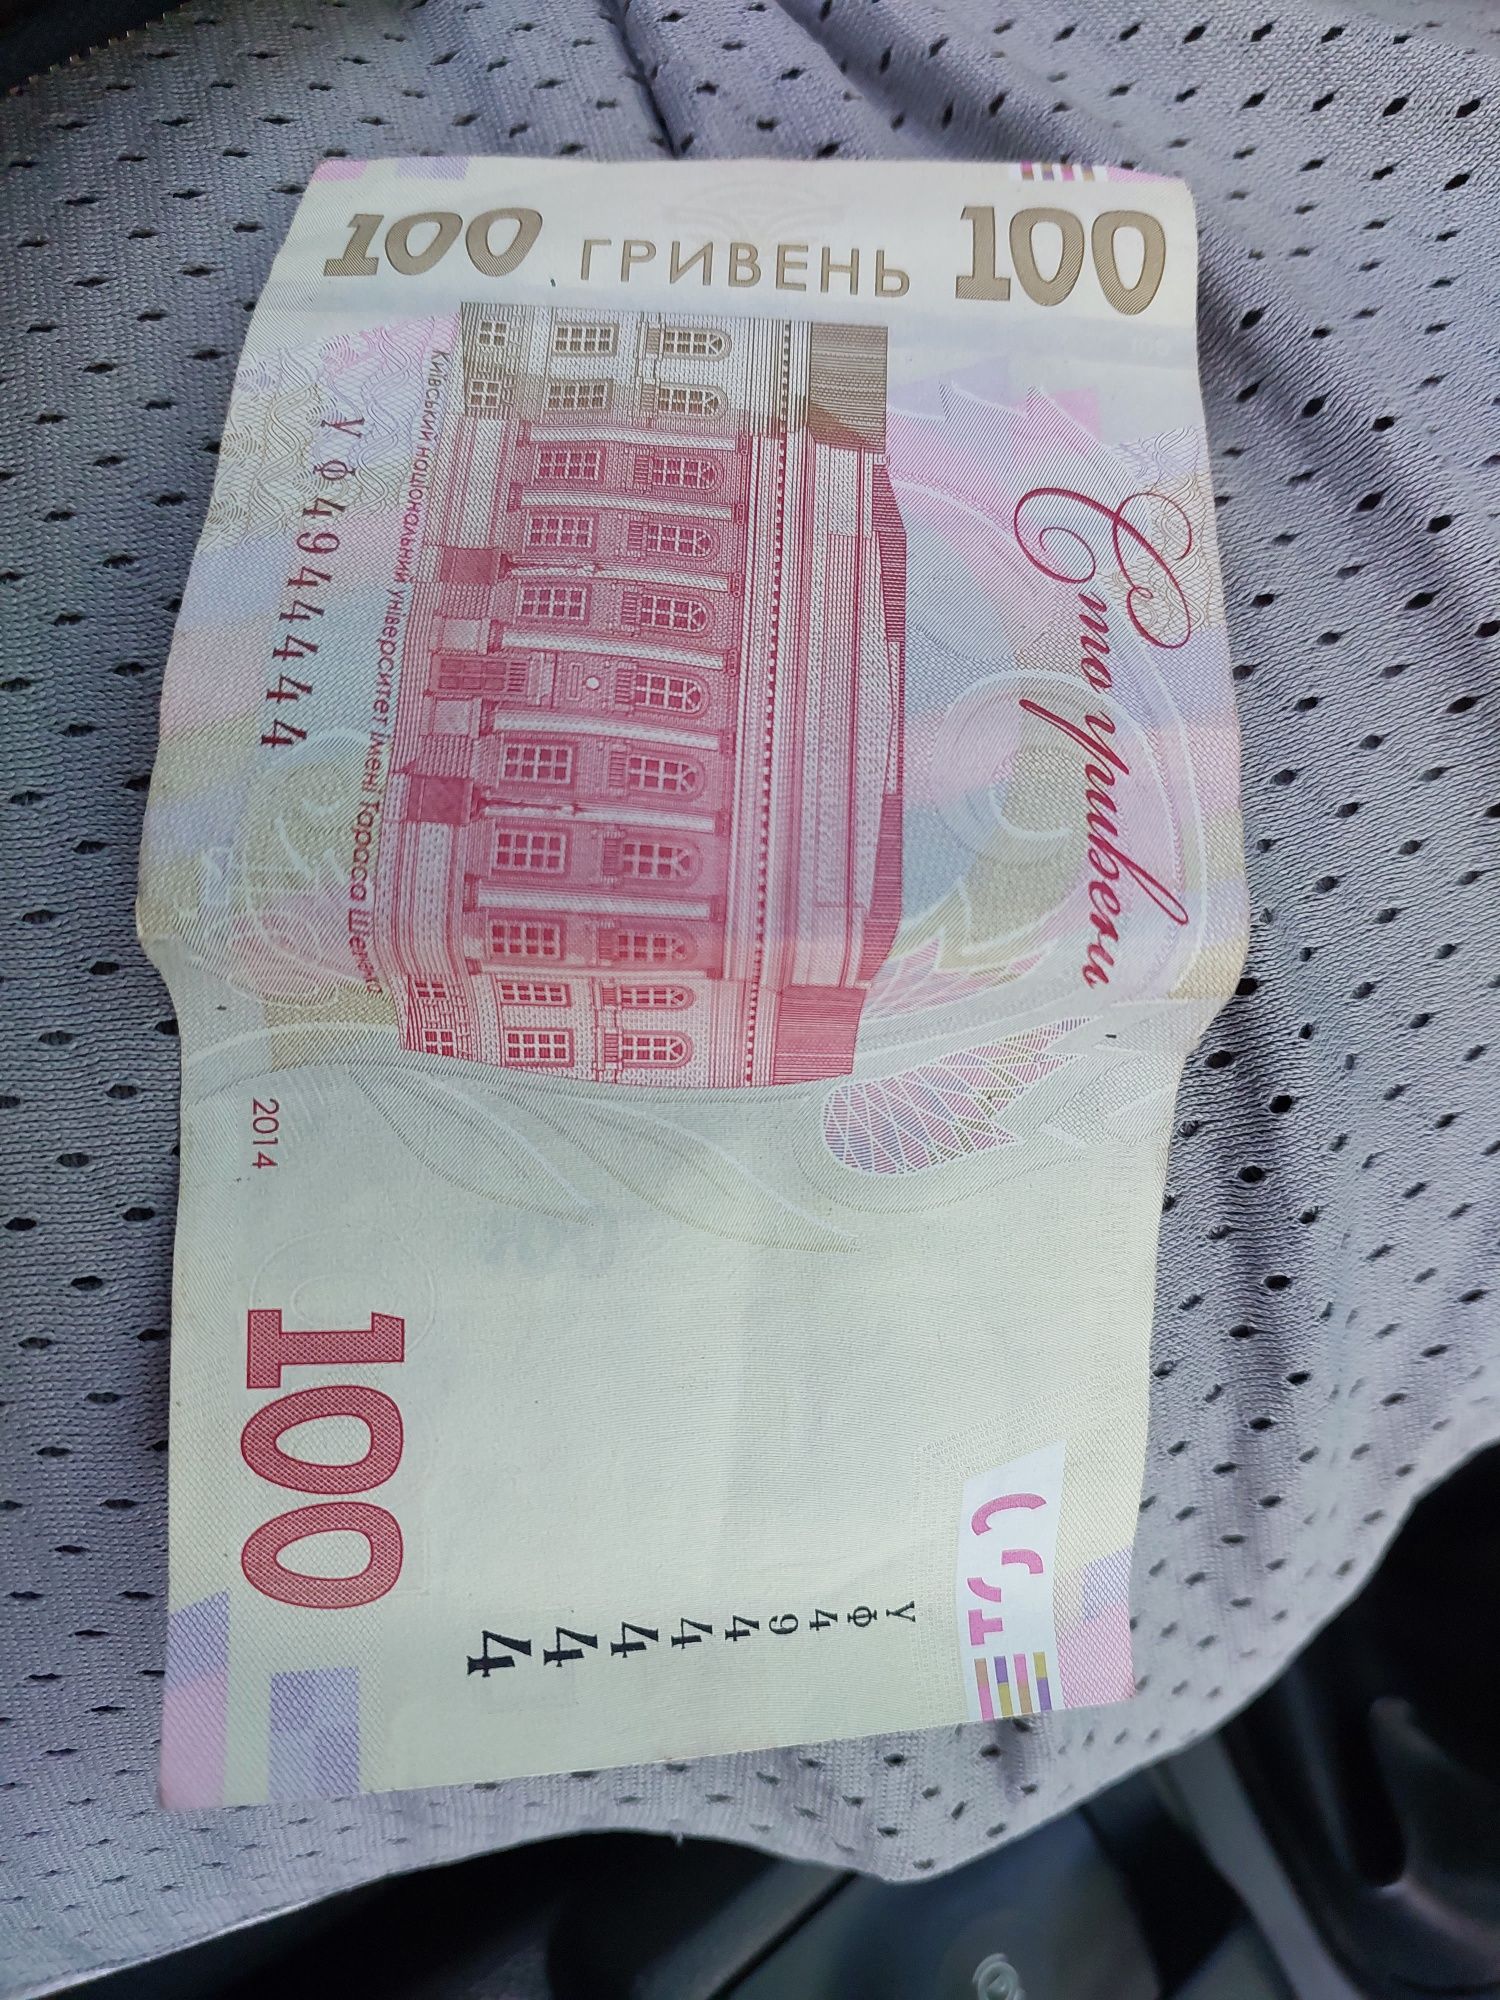 100 гривень нумерологія